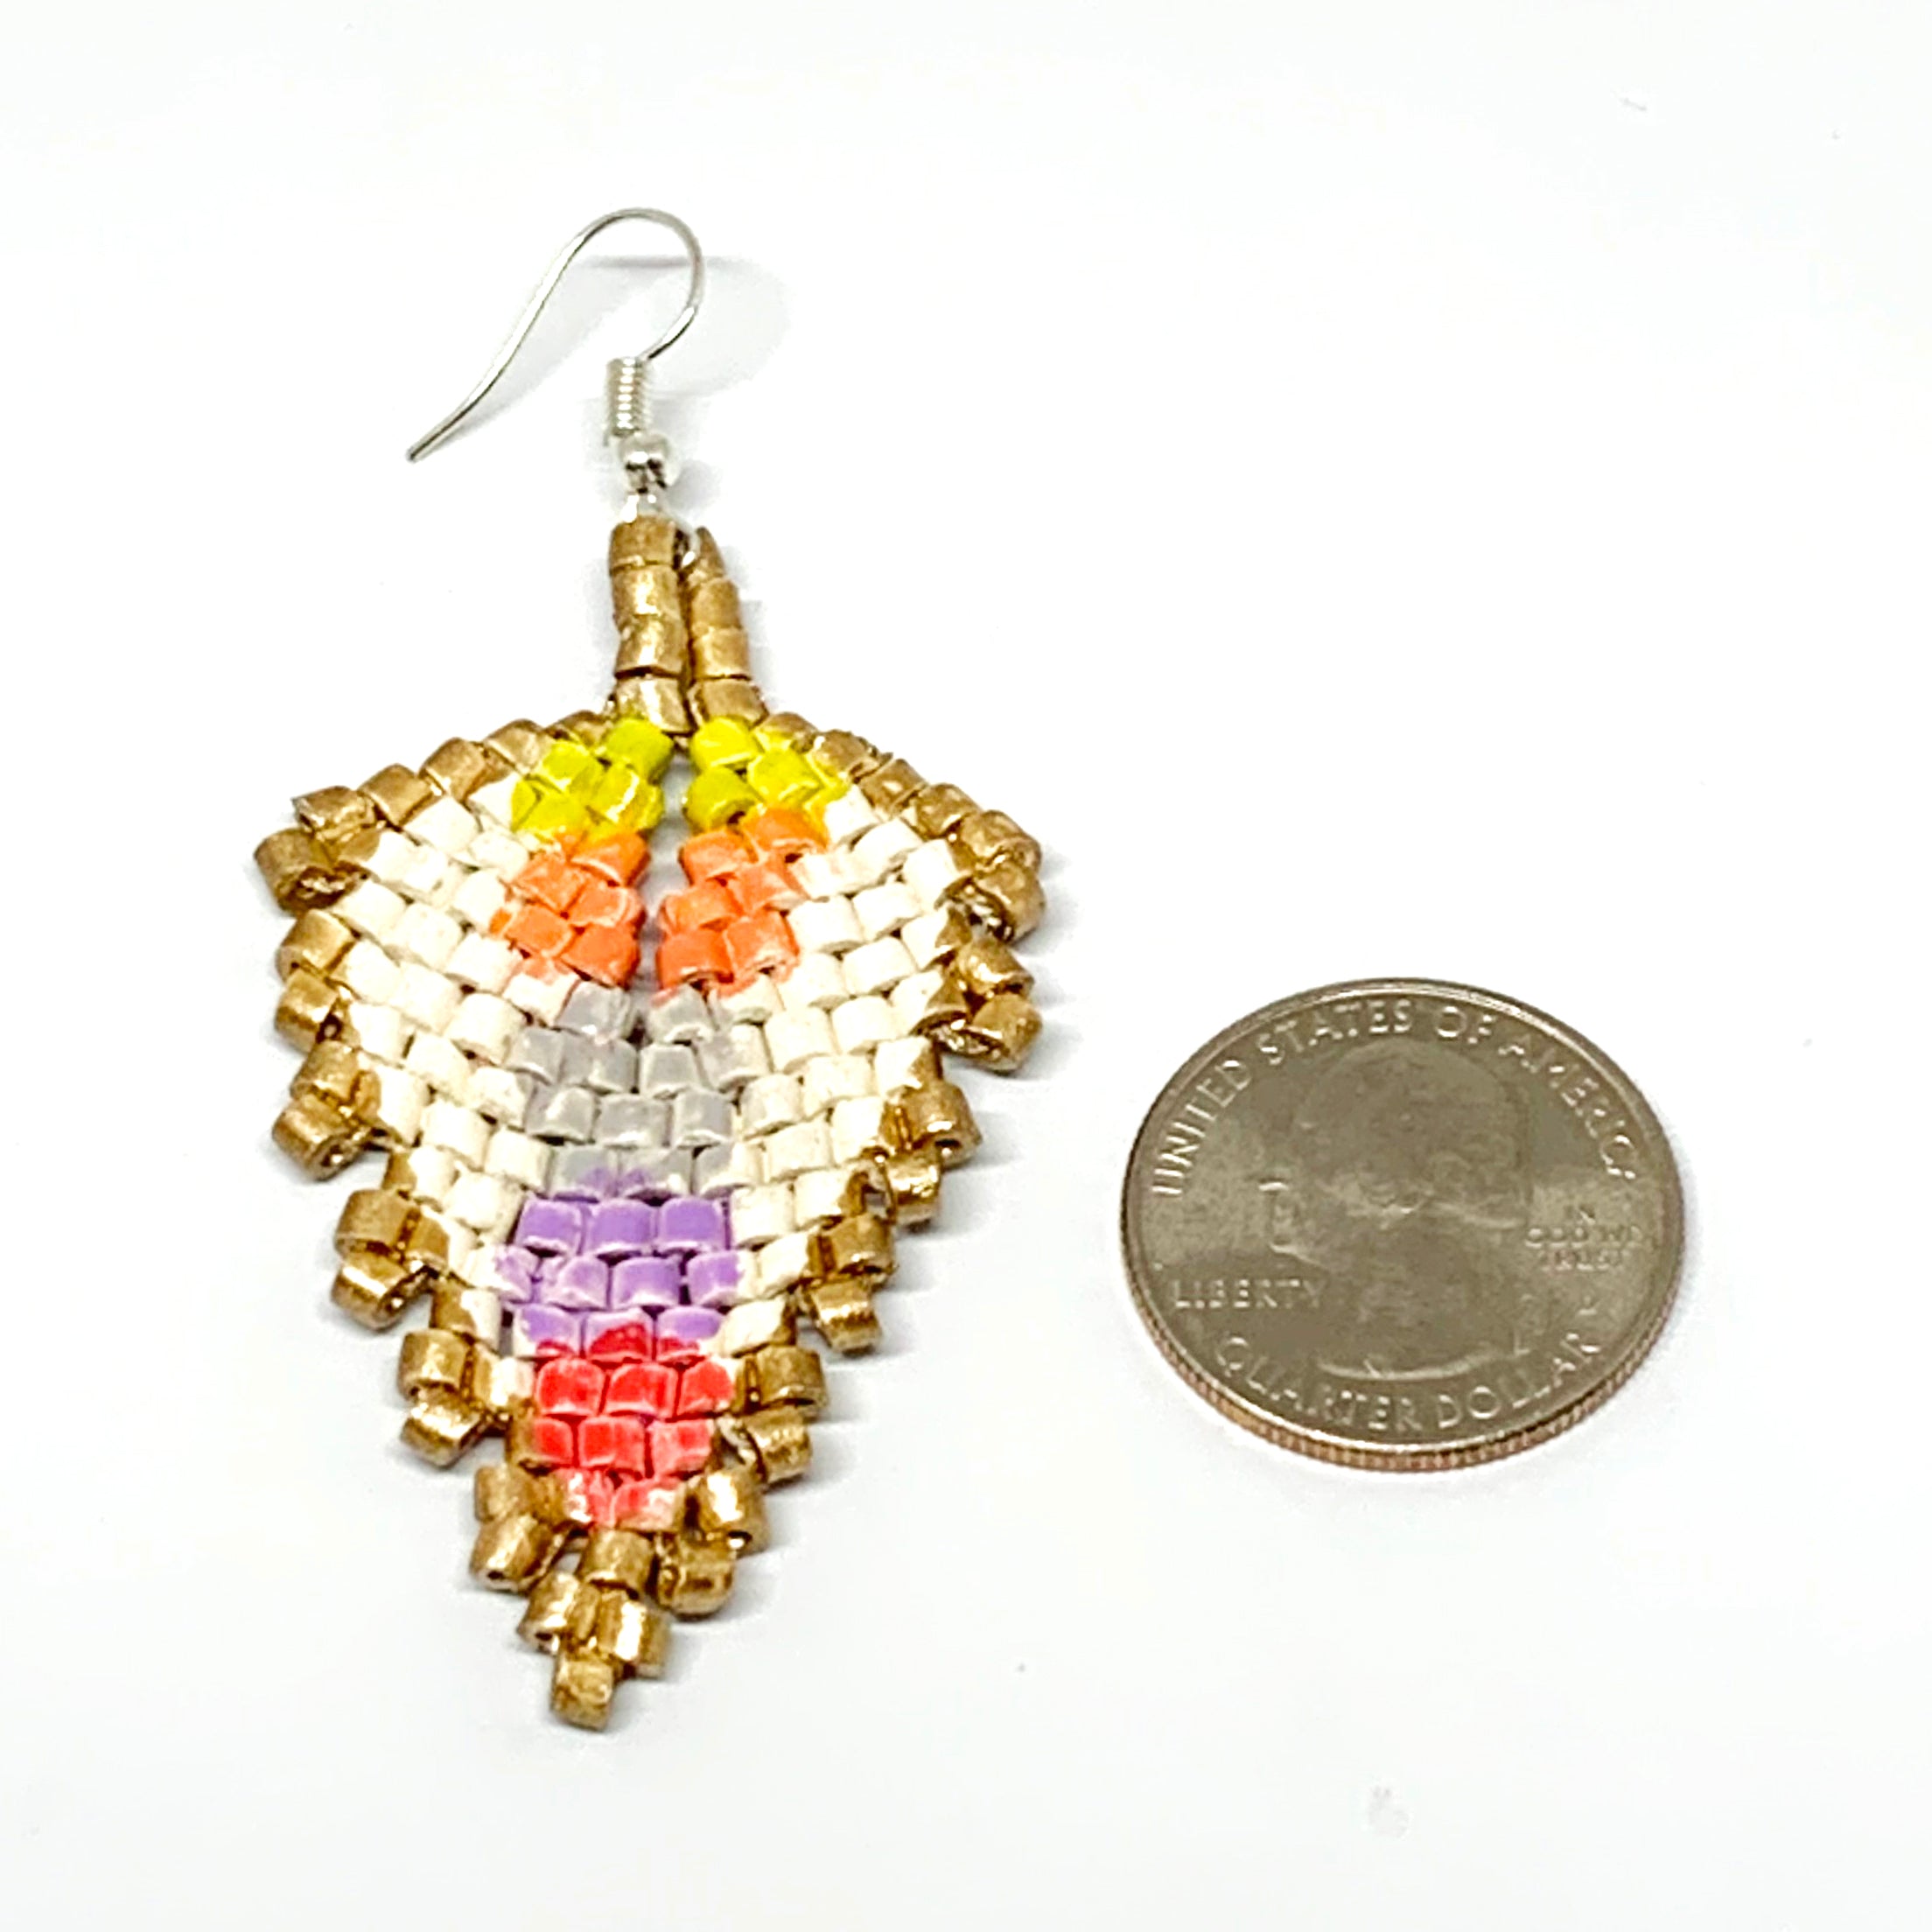 Gold, Cream & Multi Color Blocks of Ceramic Beaded Leaf Earrings